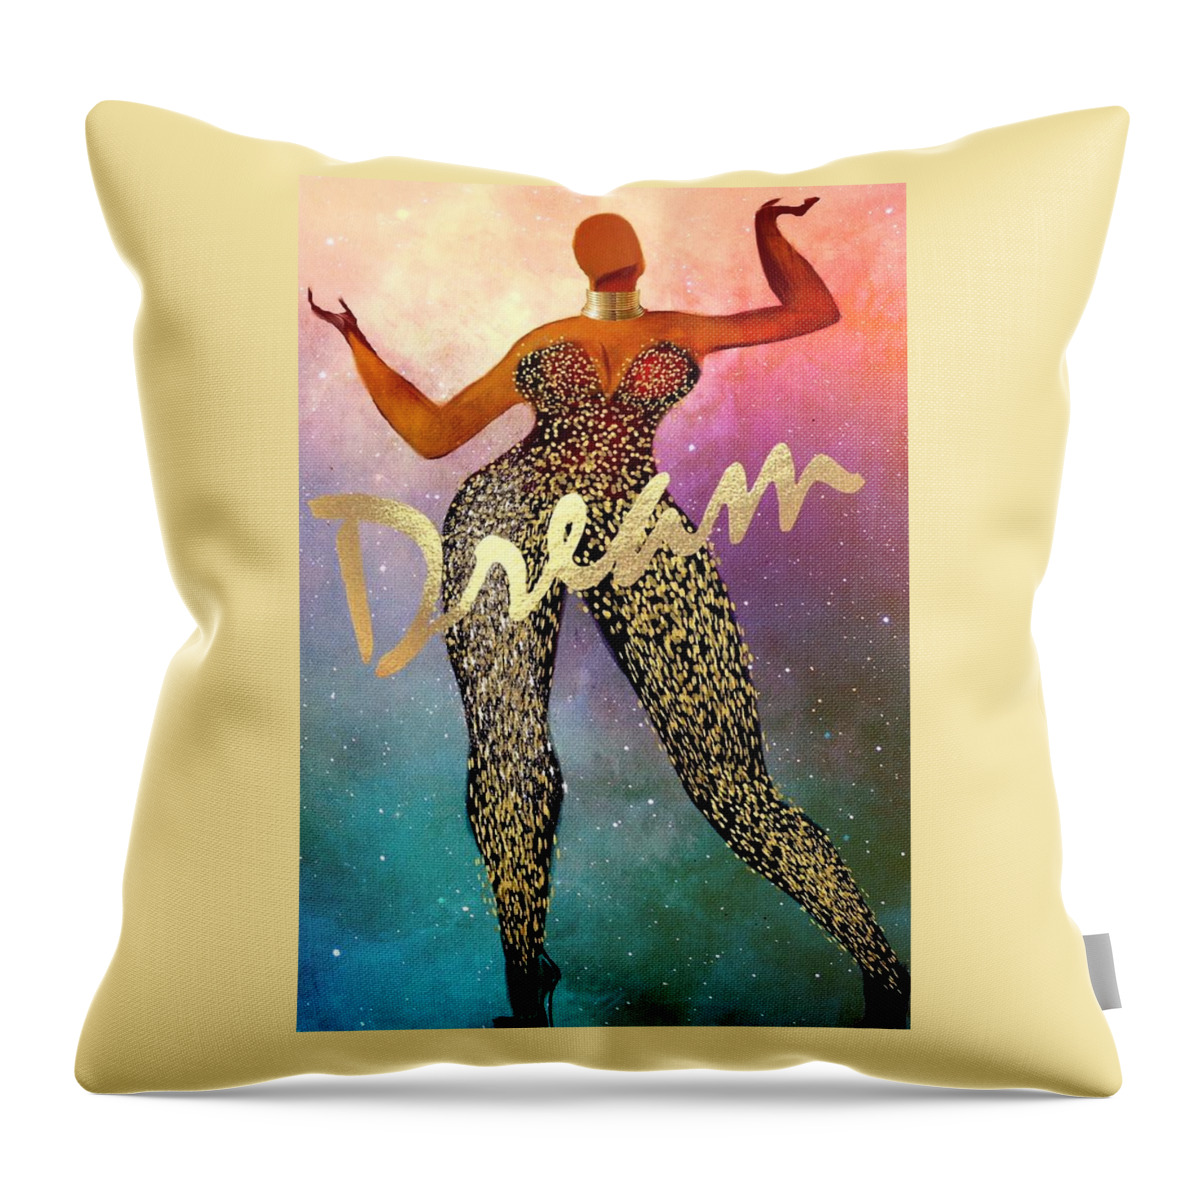 Bald Throw Pillow featuring the digital art ItWasJustADream by Romaine Head